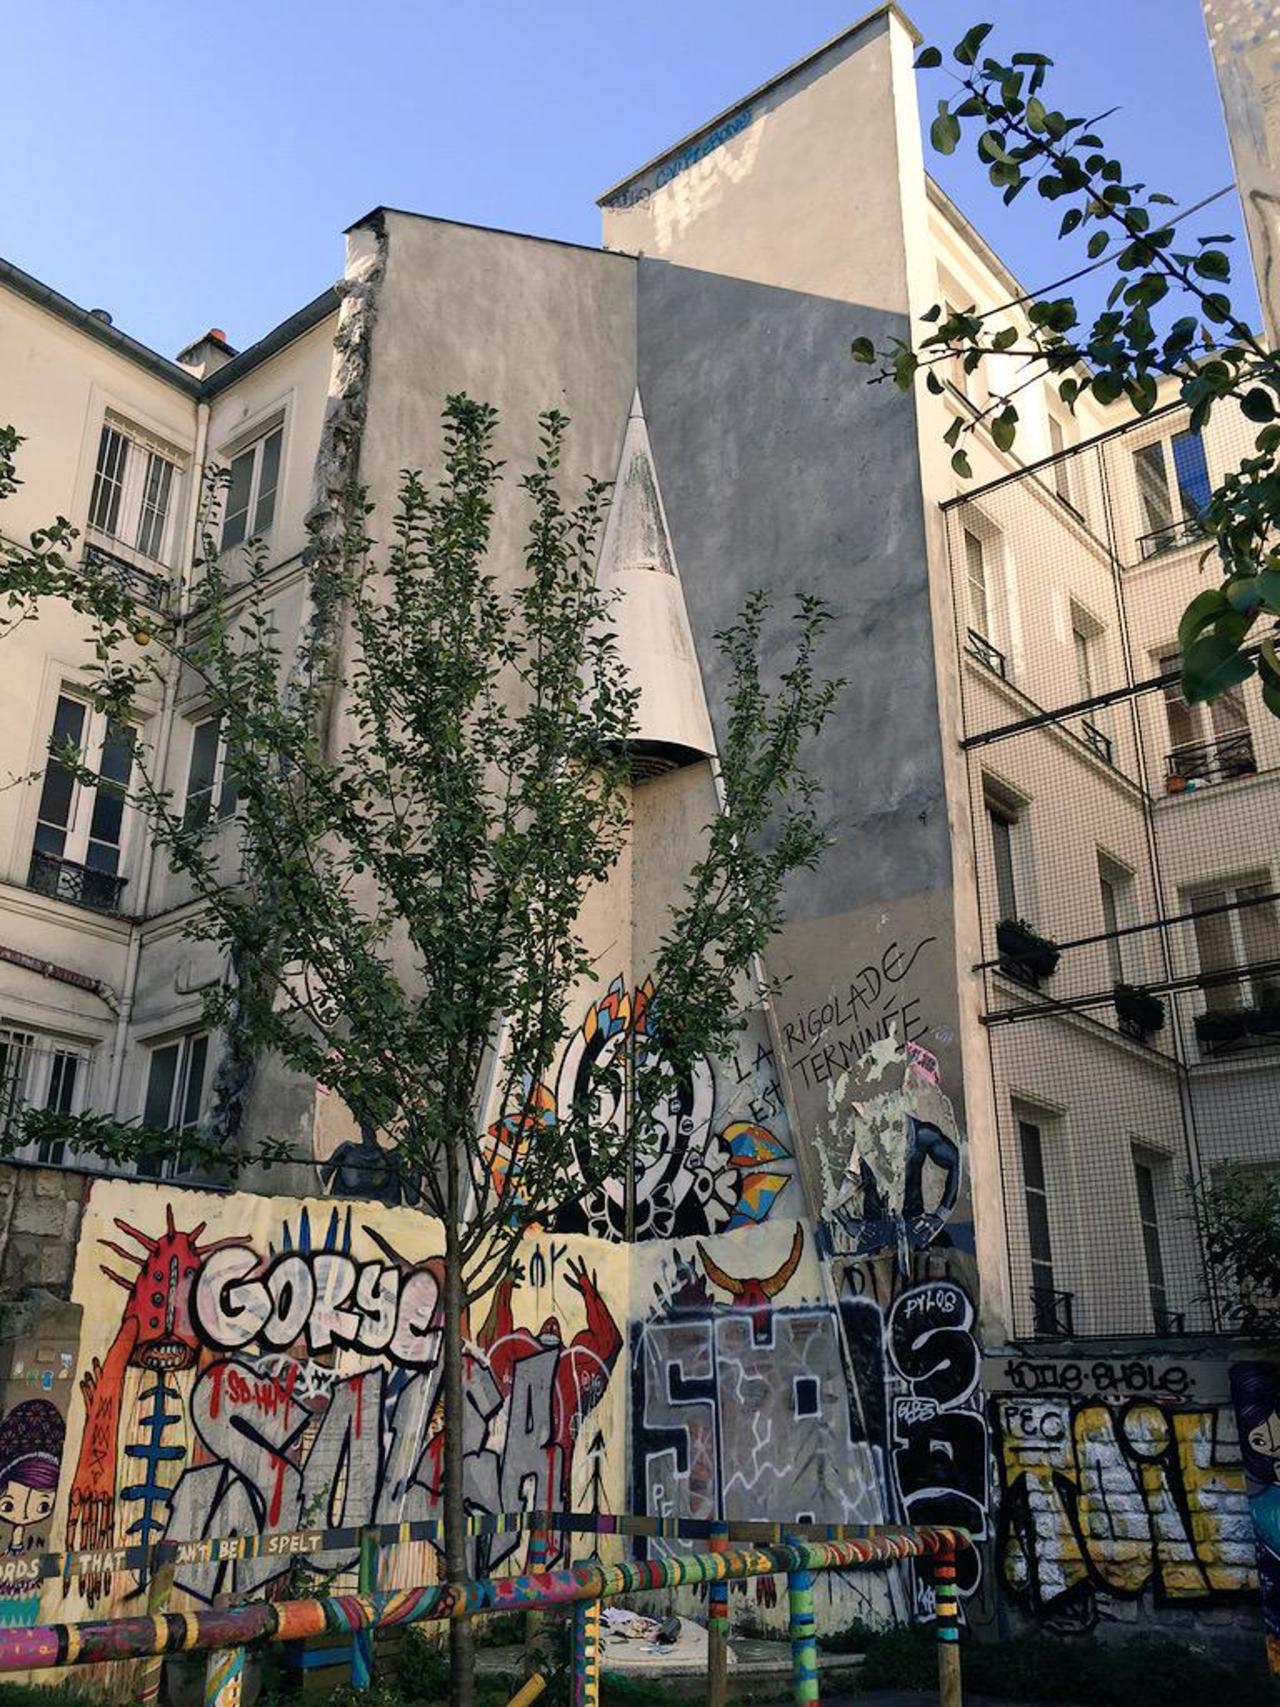 RT @amitakesonparis: Wandered around the #belleville #neighborhood #Paris & stumbled upon this cool #streetart #19eme #graffiti #urbanart http://t.co/l0xfgNbx99